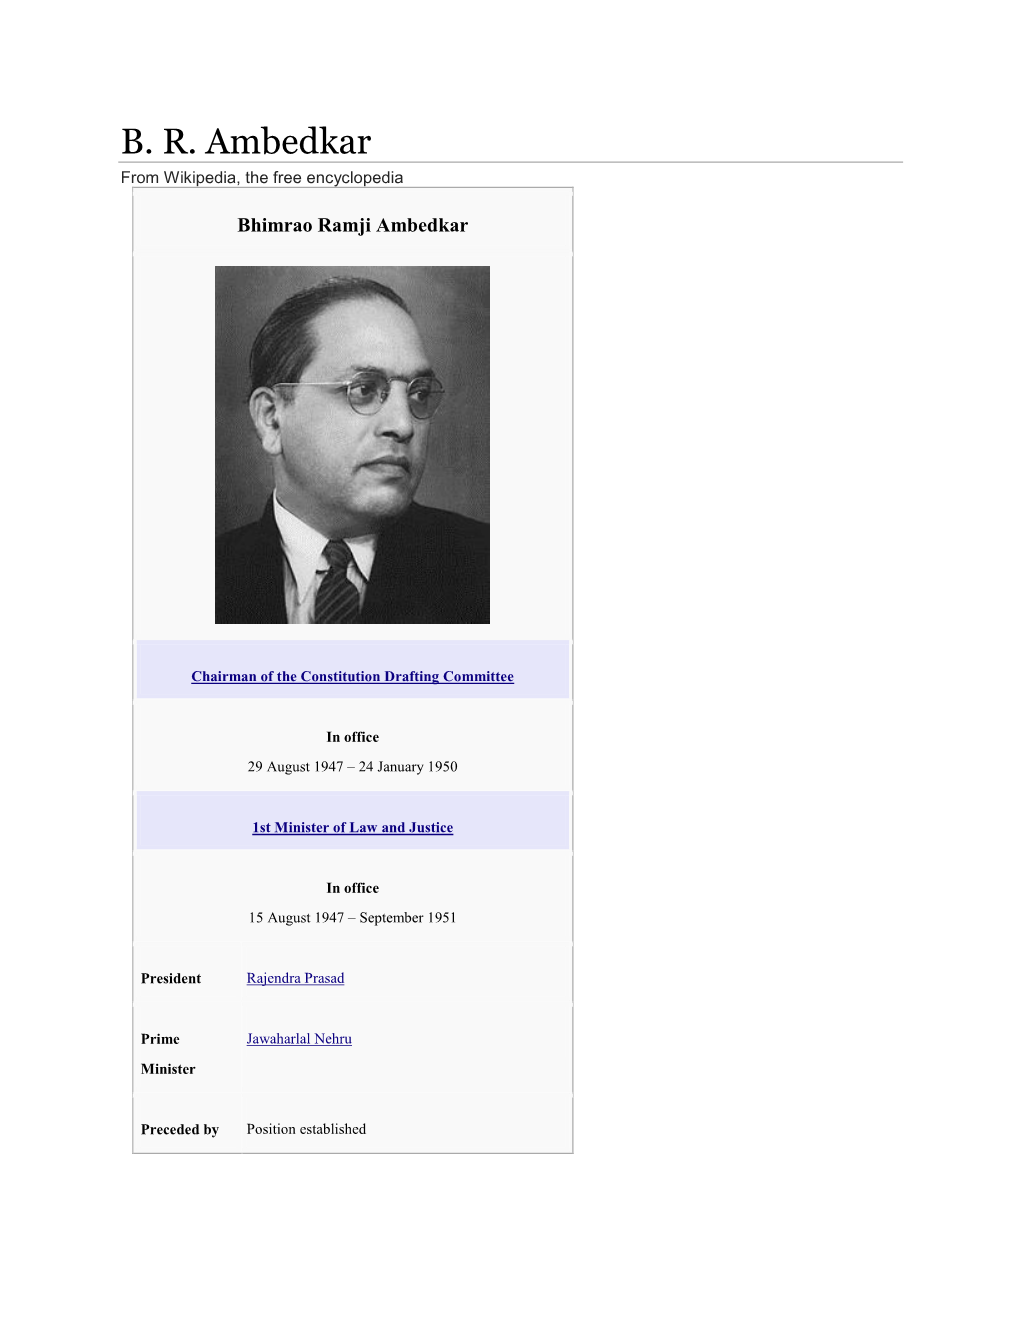 B. R. Ambedkar from Wikipedia, the Free Encyclopedia